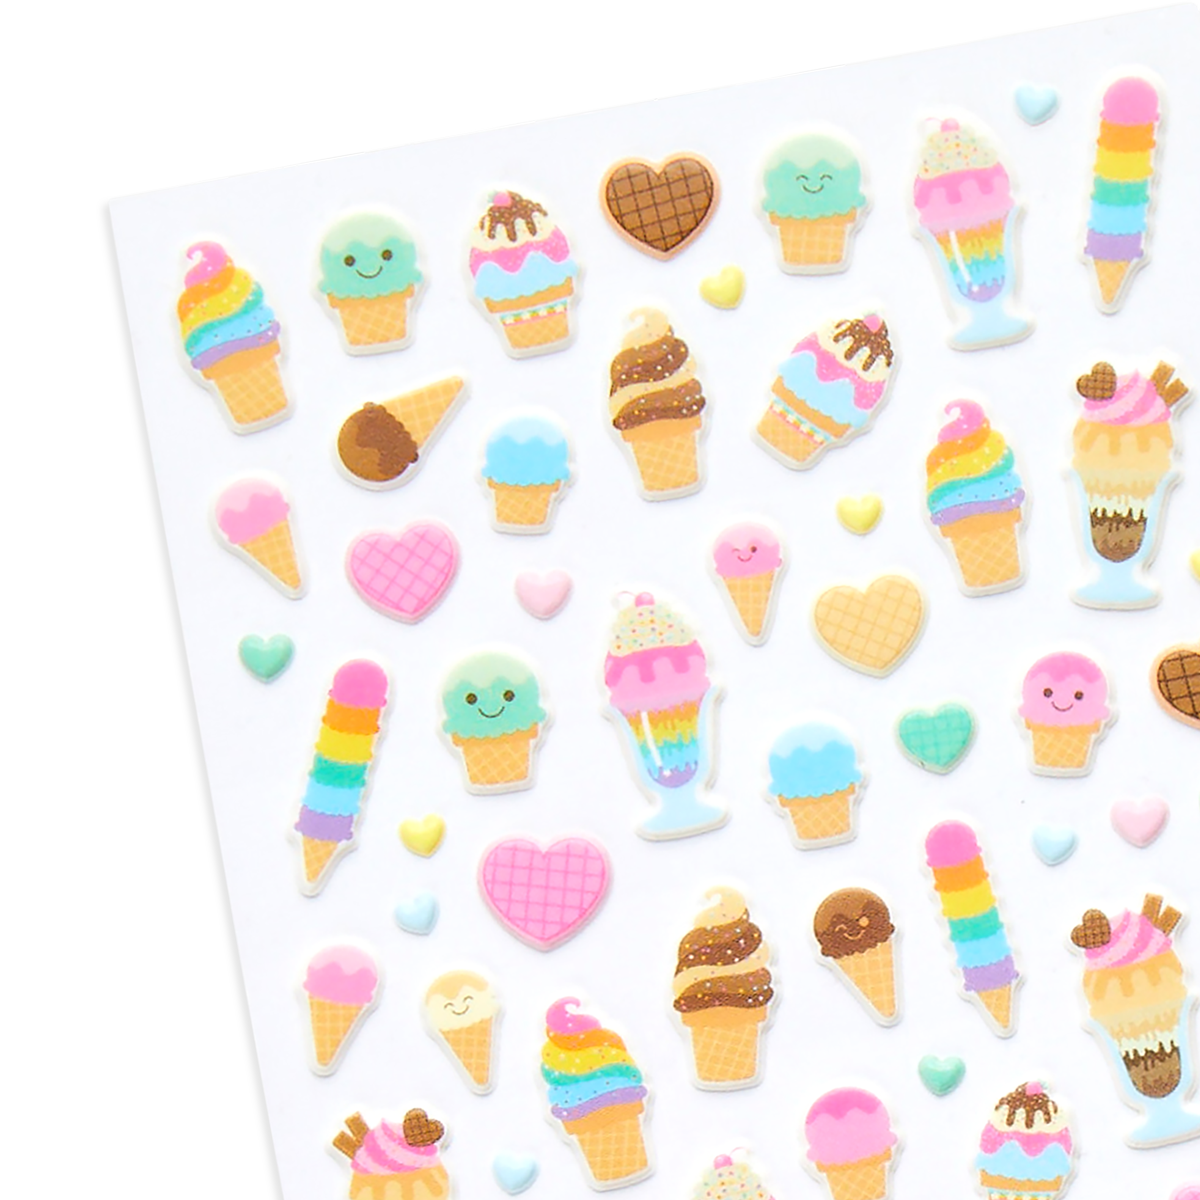 Stickiville Ice Cream Dream sticker sheet close up